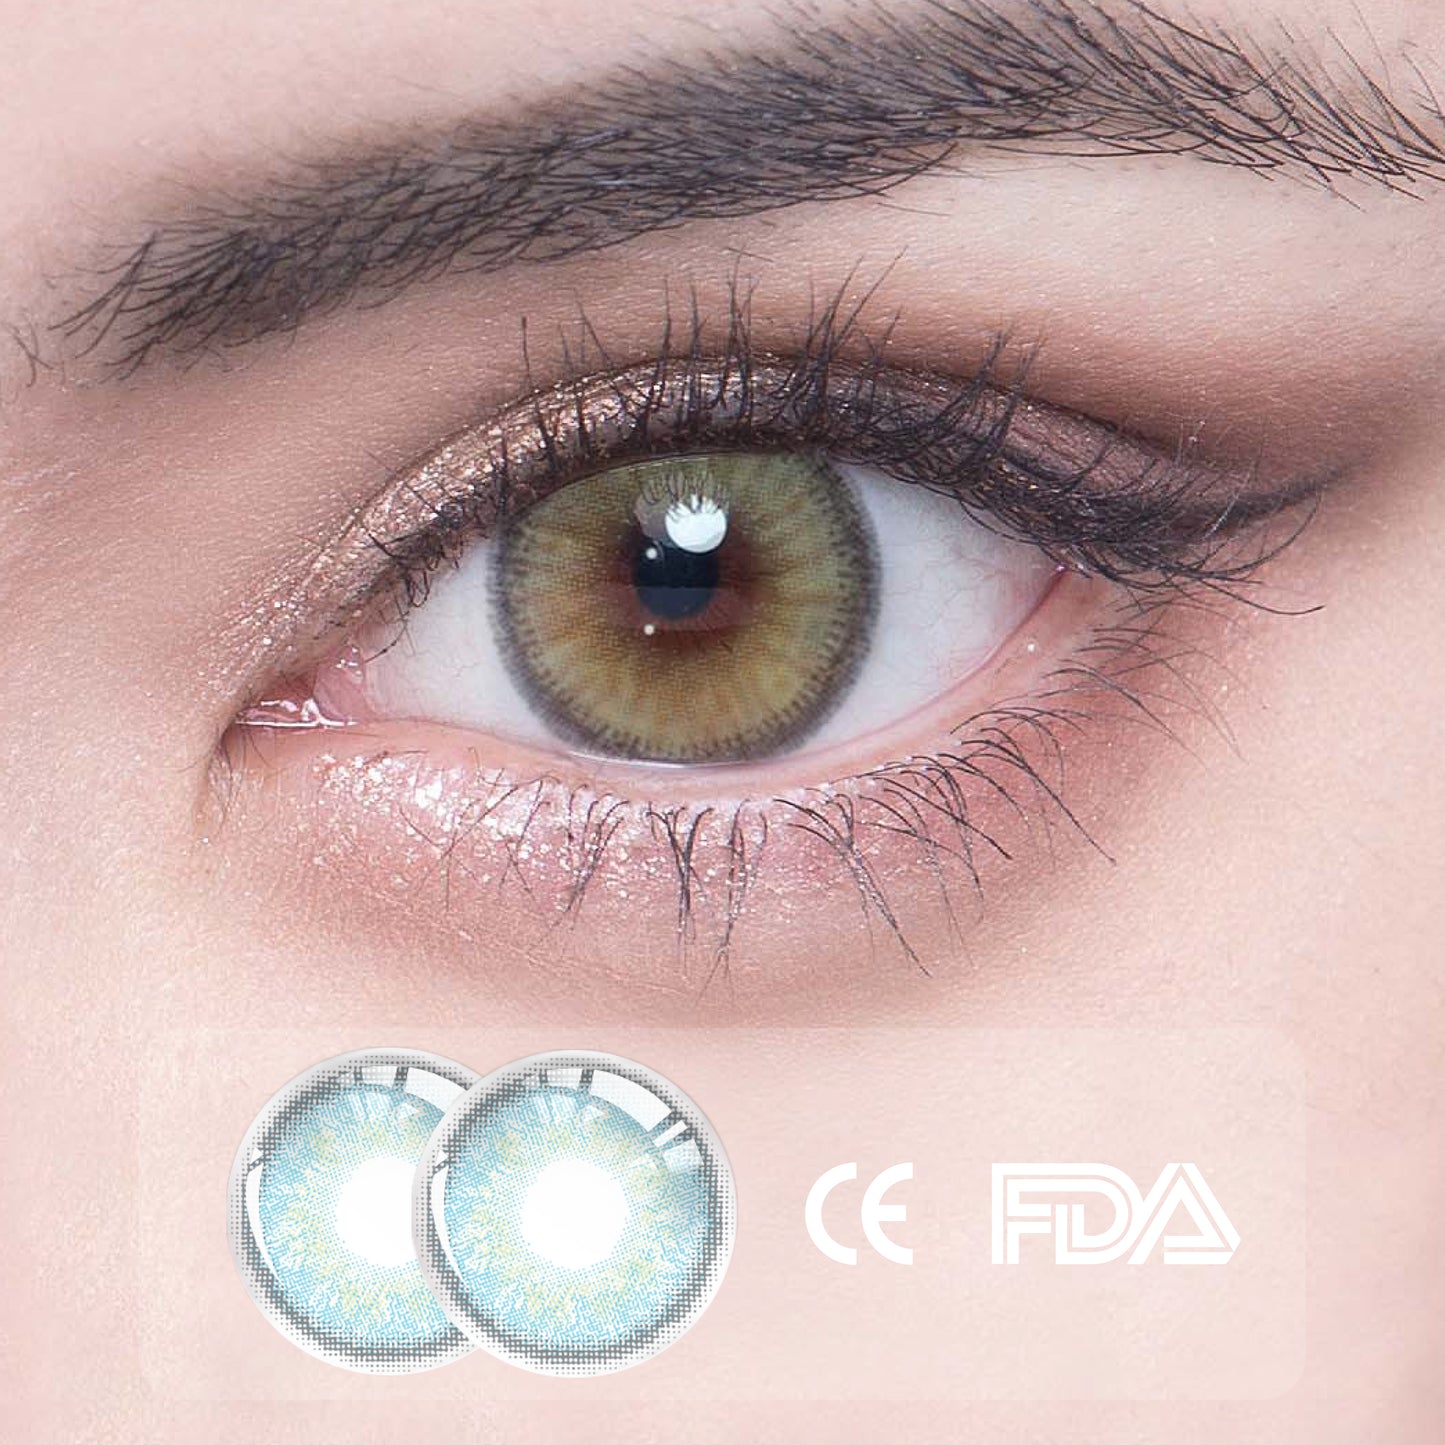 1Pcs FDA Certificate Eyes Colorful Contact Lenses - Wonderland blue